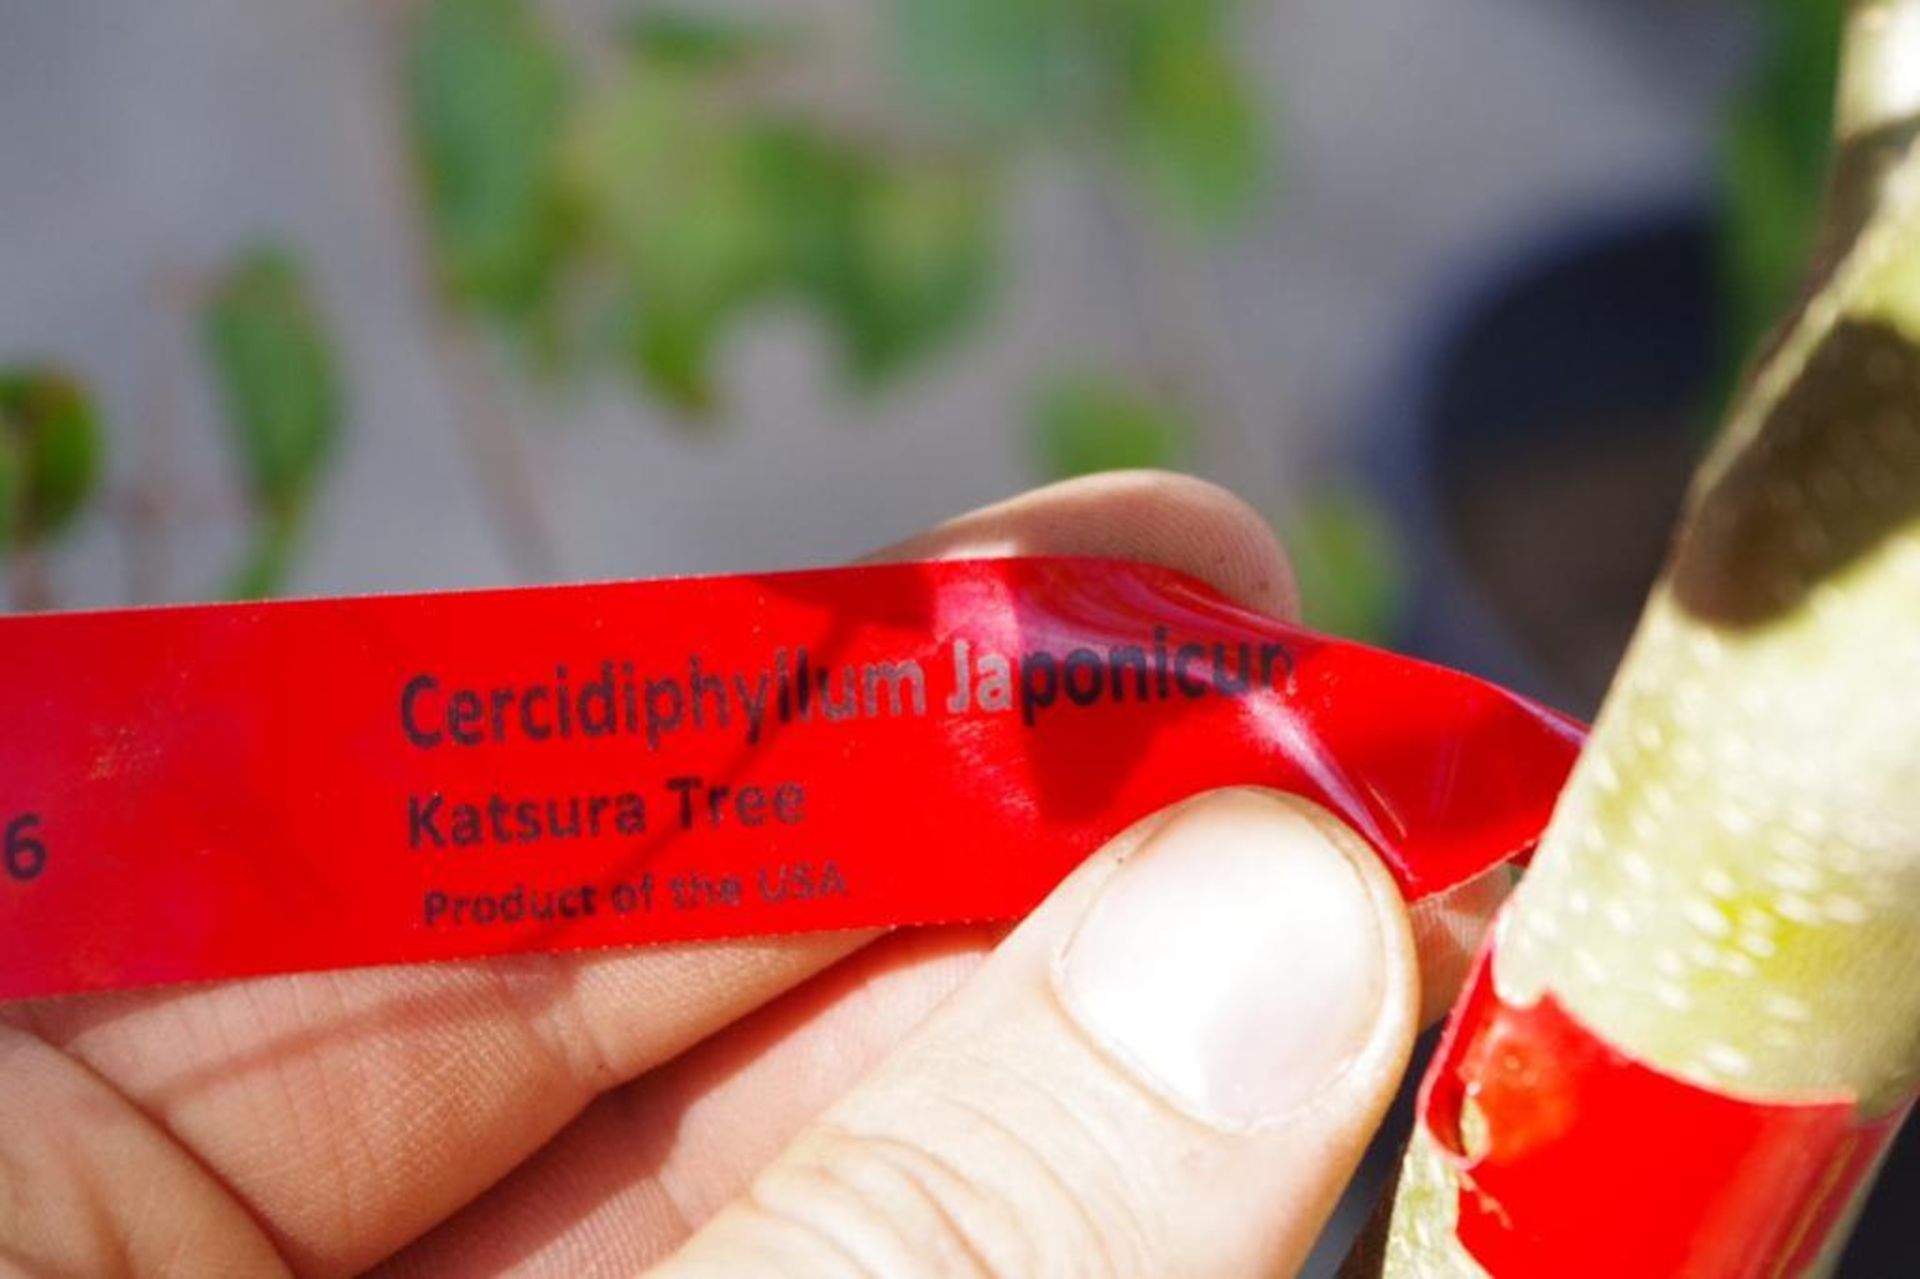 Premium CERCIDIPHYLLUM JAPONICUR Katsura Tree, 88"H, Product of USA - Image 2 of 3